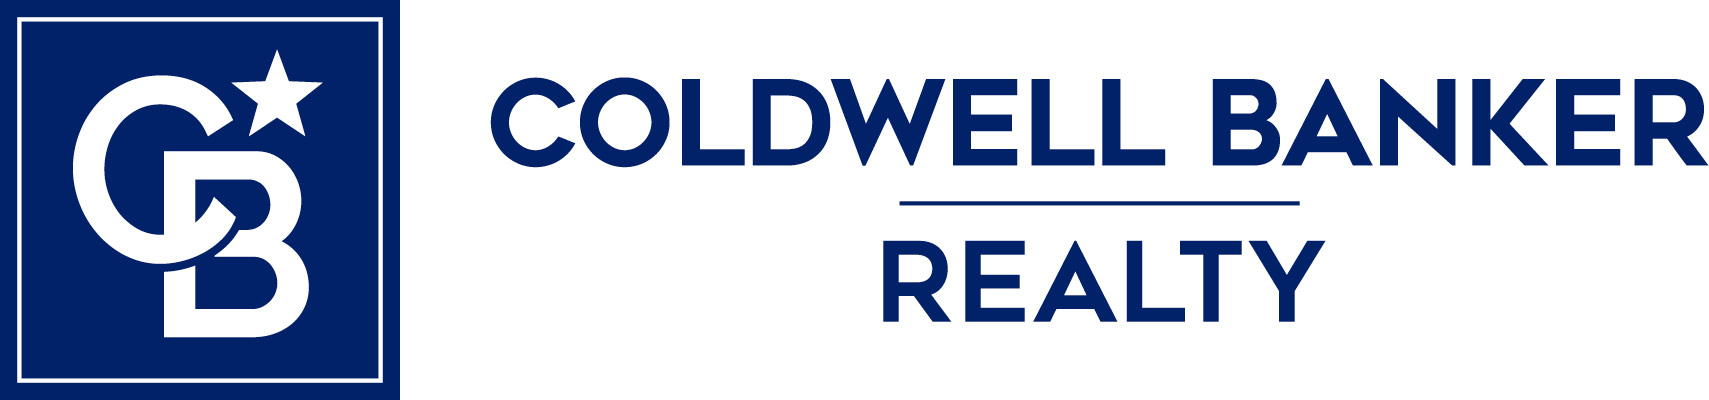 Coldwell Banker Logo - Copy